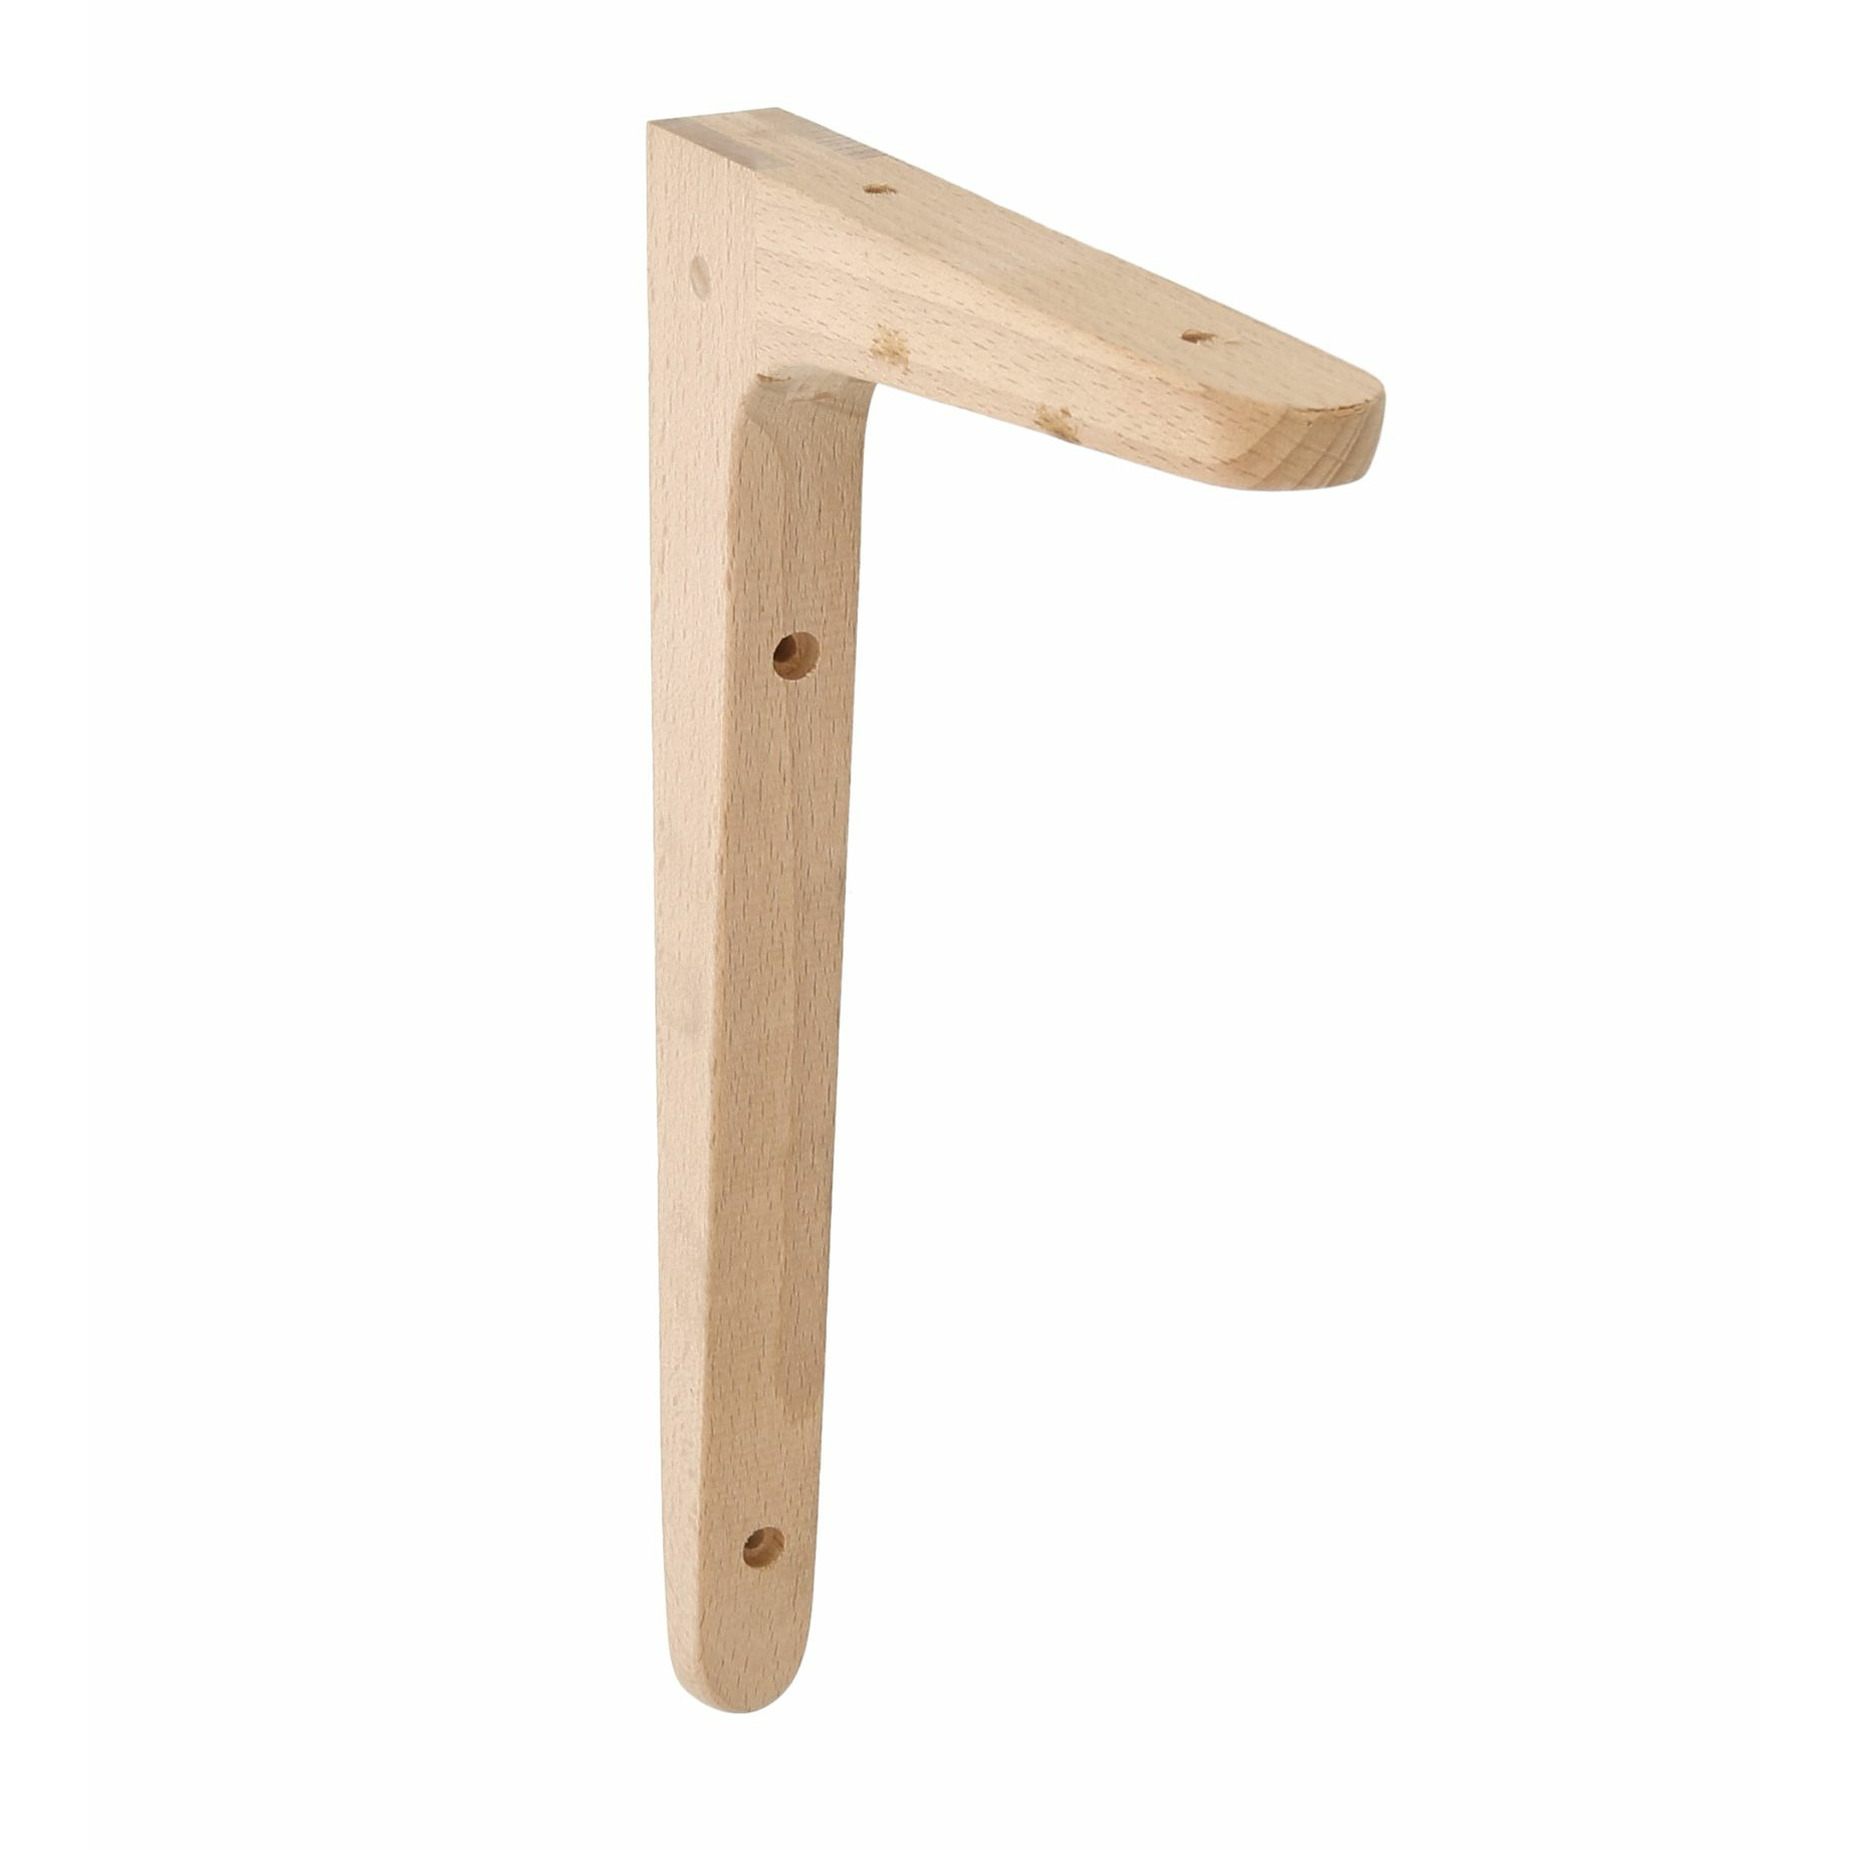 AMIG Plankdrager/planksteun van hout - lichtbruin - H250 x B150 mm -